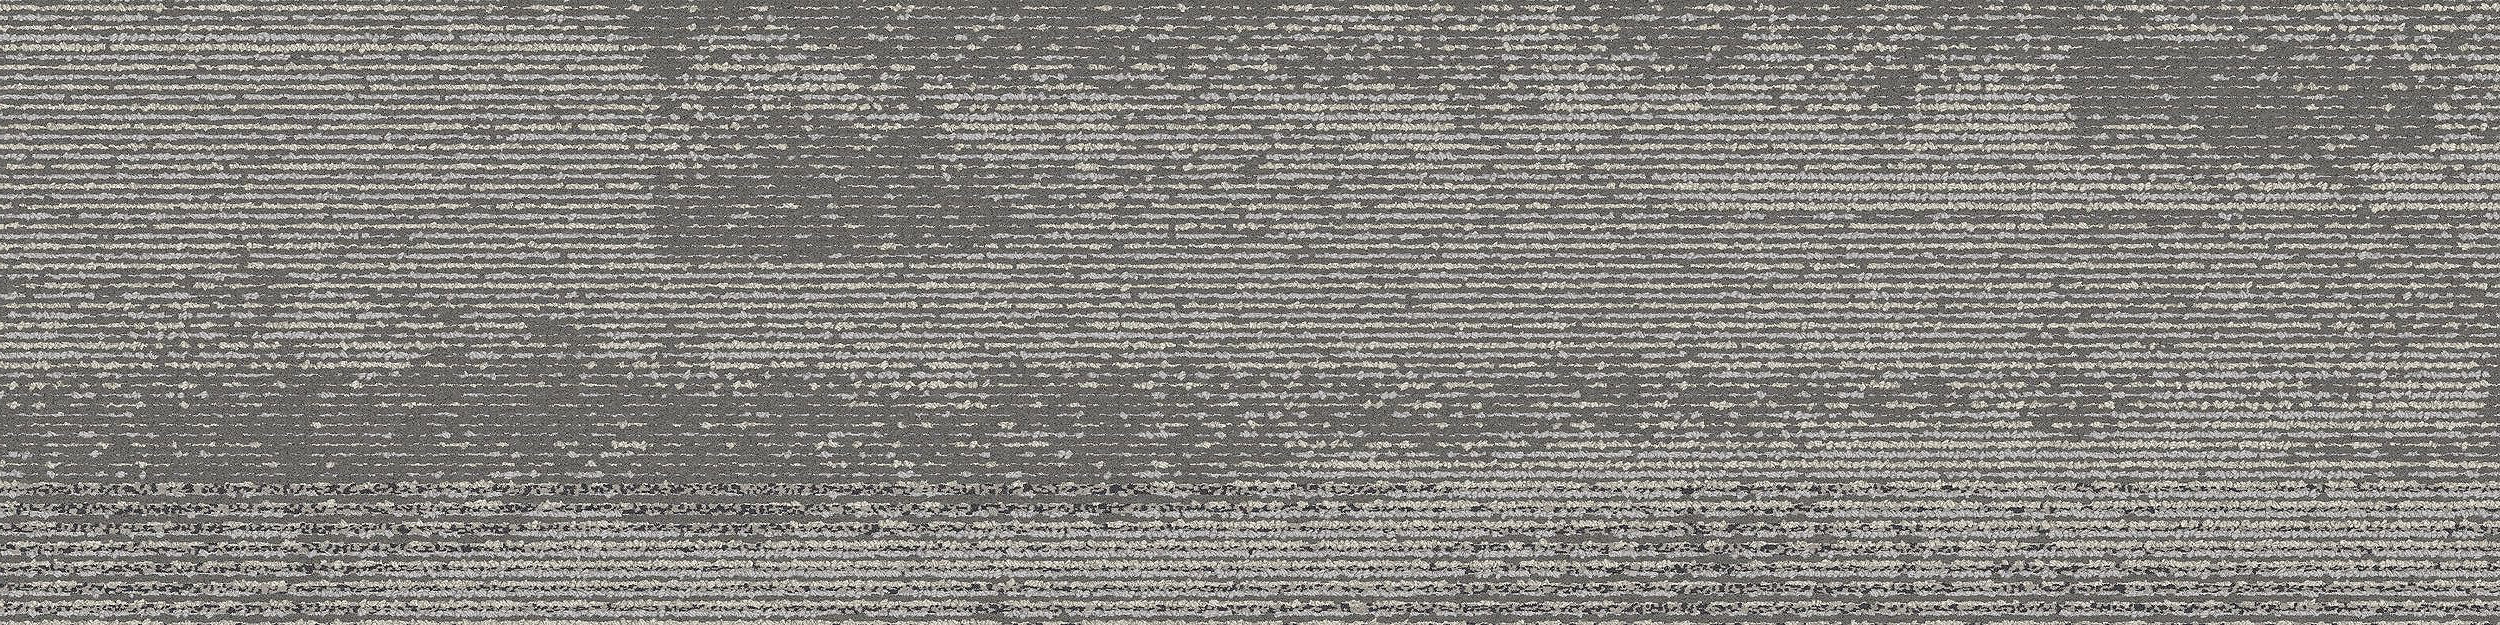 CT112 Carpet Tile In Pewter image number 3